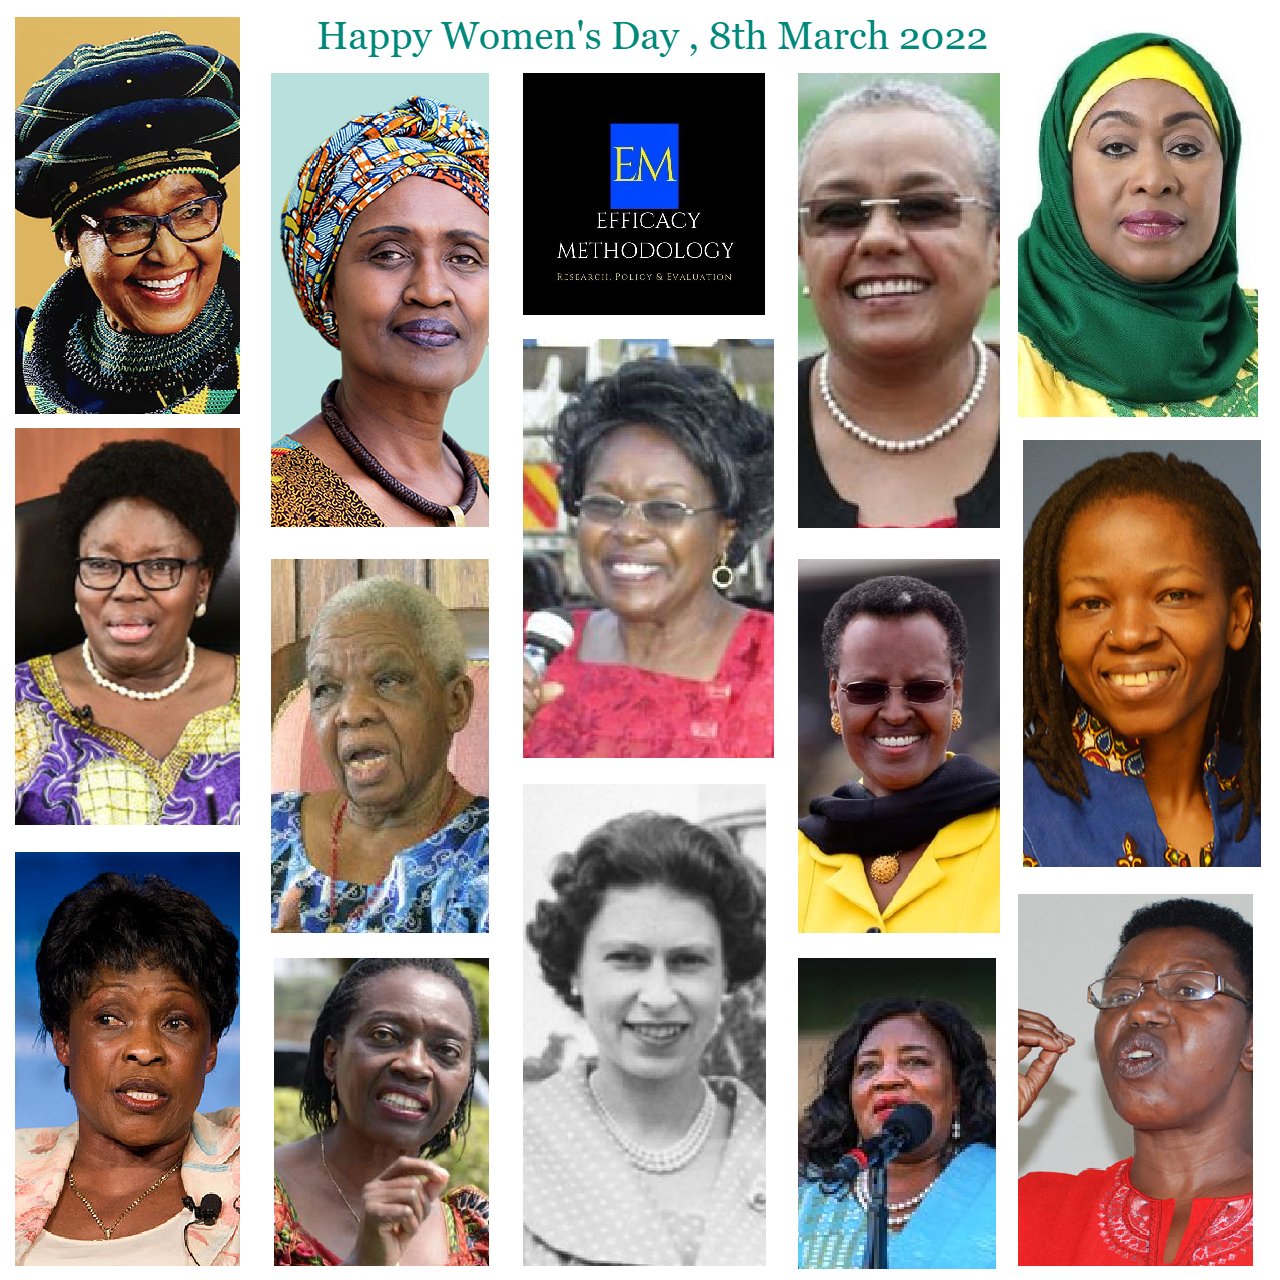 Celebrating International Women's Day 2022